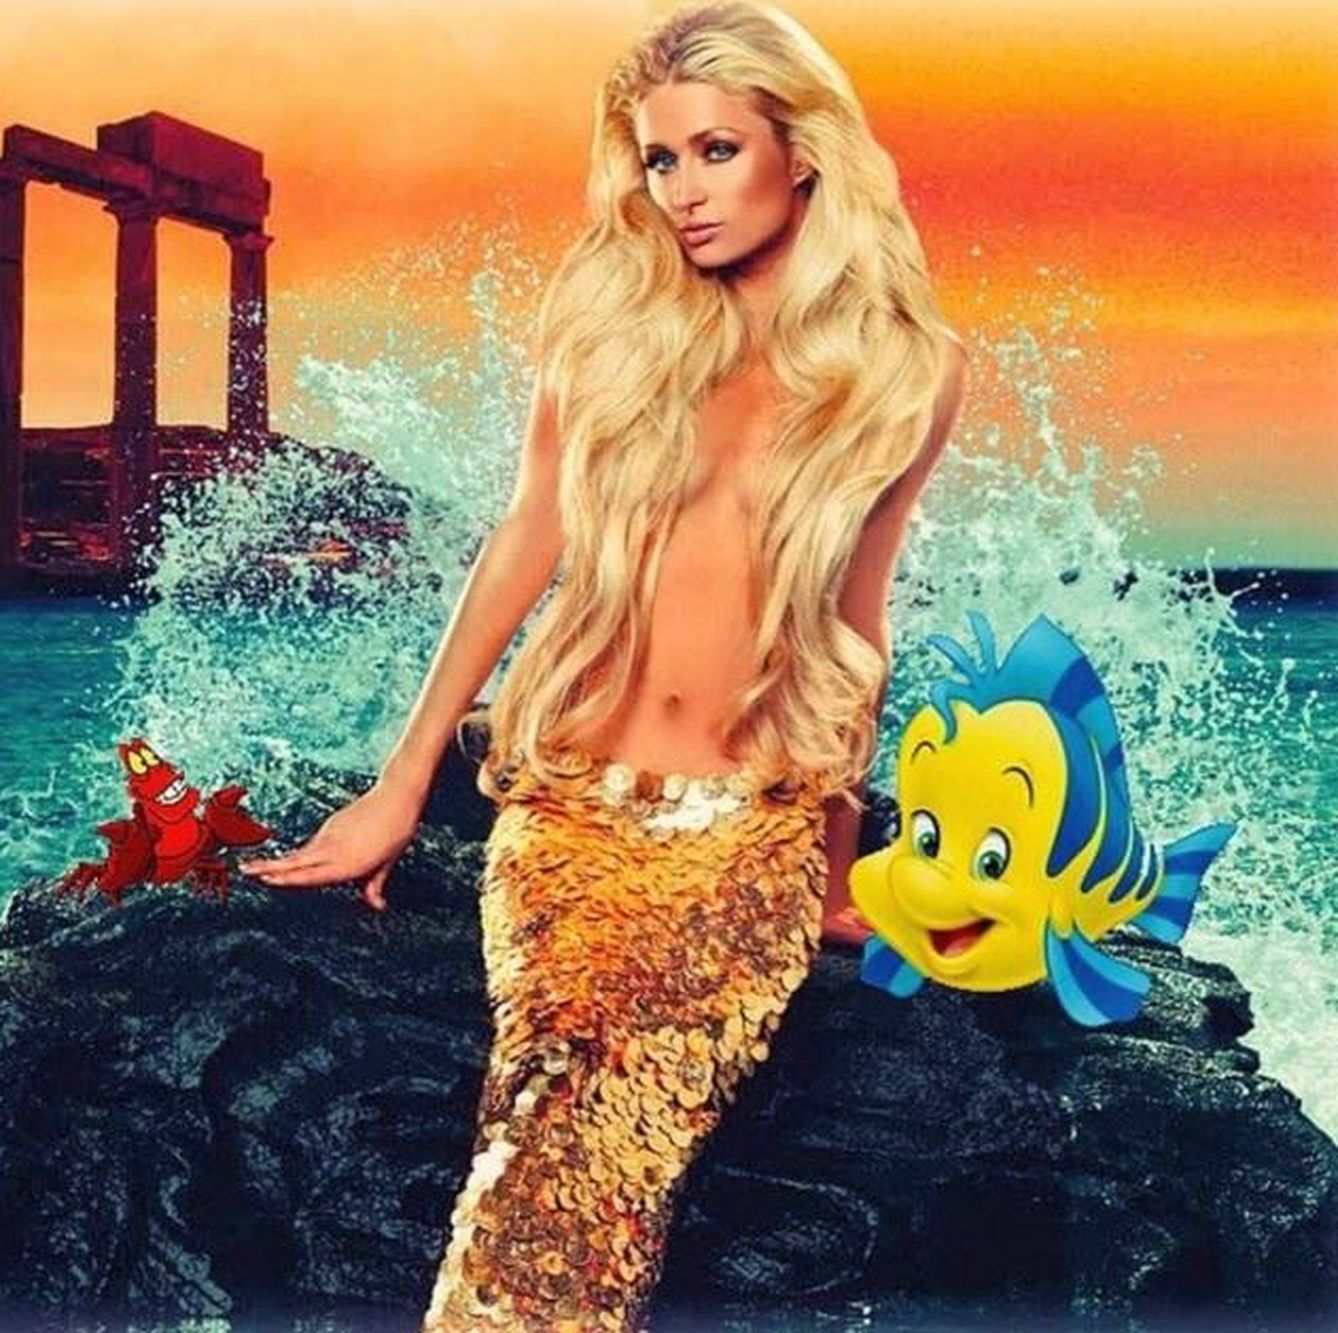 Paris Hilton caracterizada como 'La Sirenita' (Instagram)